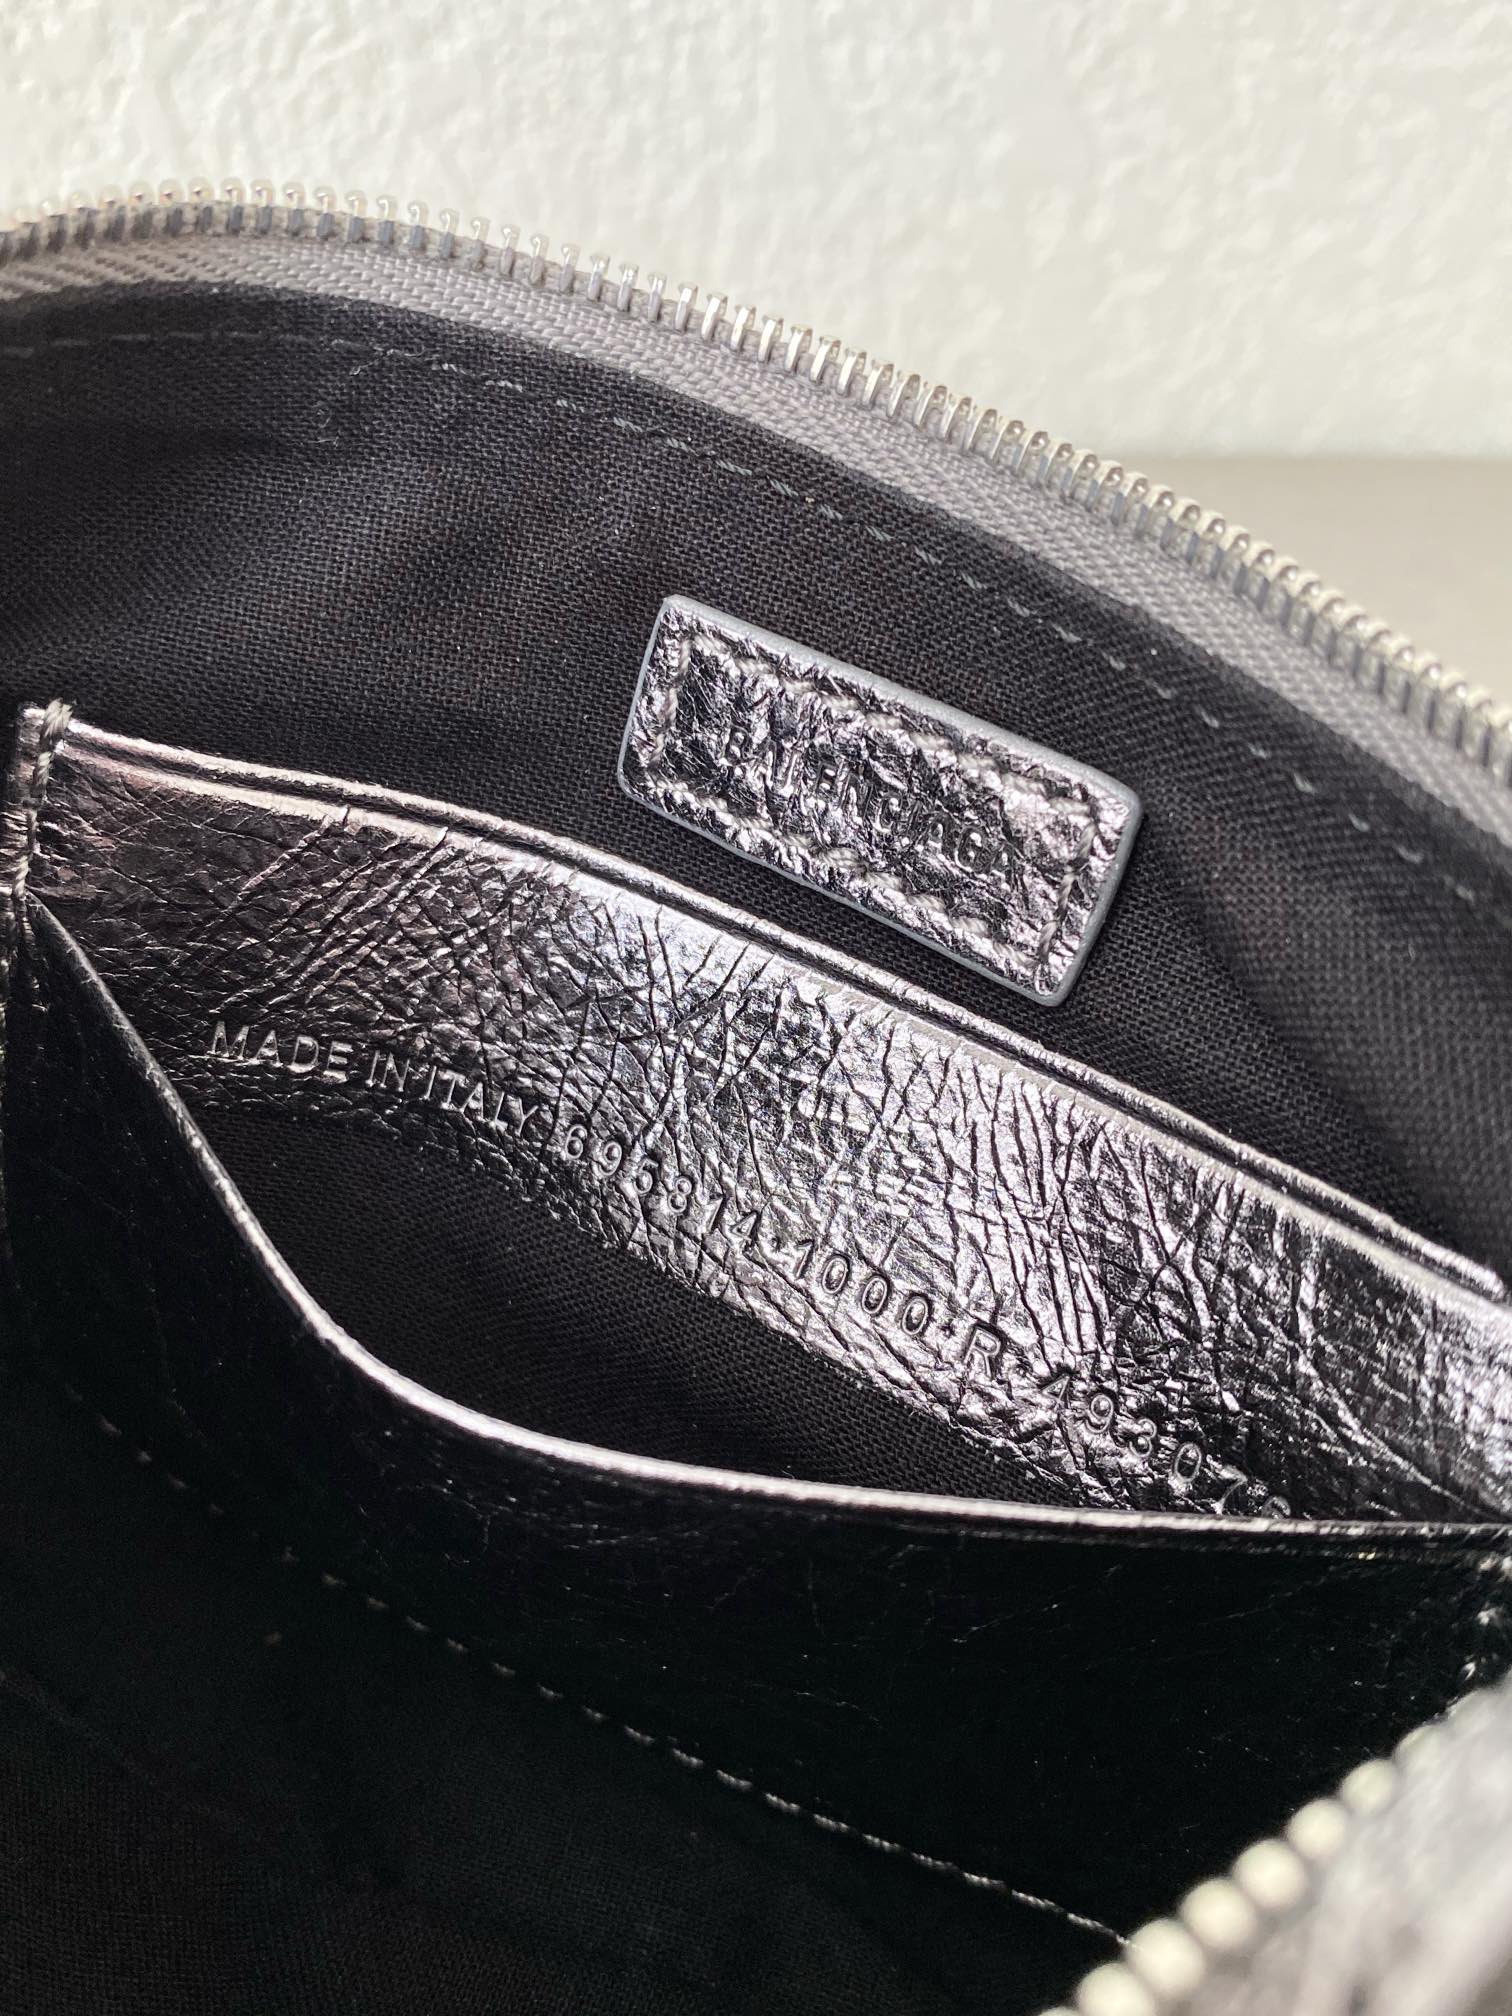 Authenticating Balenciaga Handbags  Learn How to Spot Real Bags